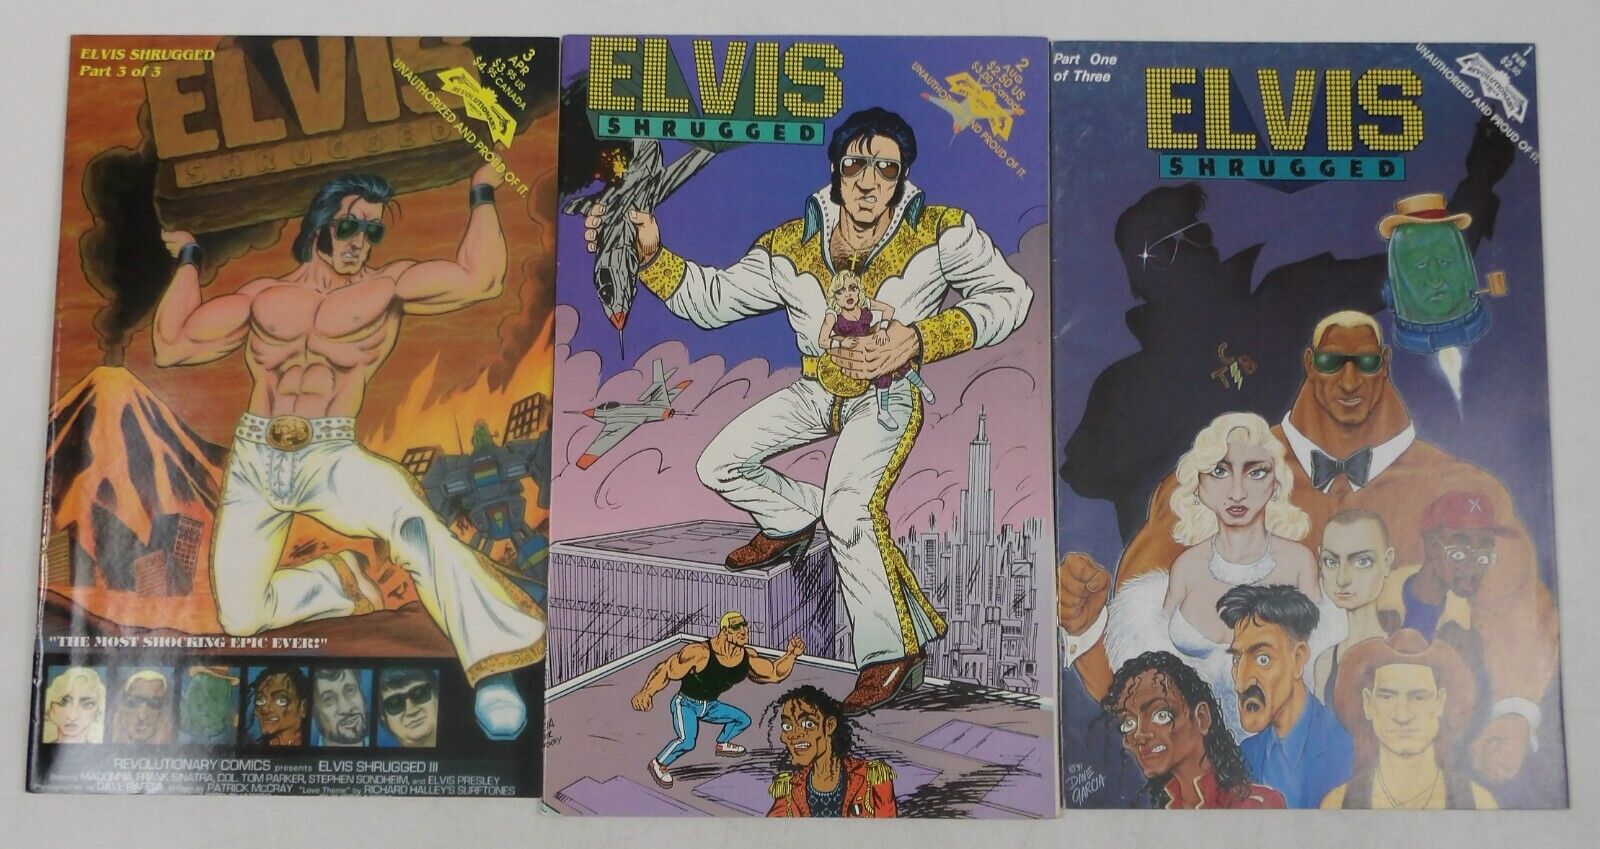 Elvis Shrugged #1-3 FN/VF complete series - parody of Ayn Rand & music industry